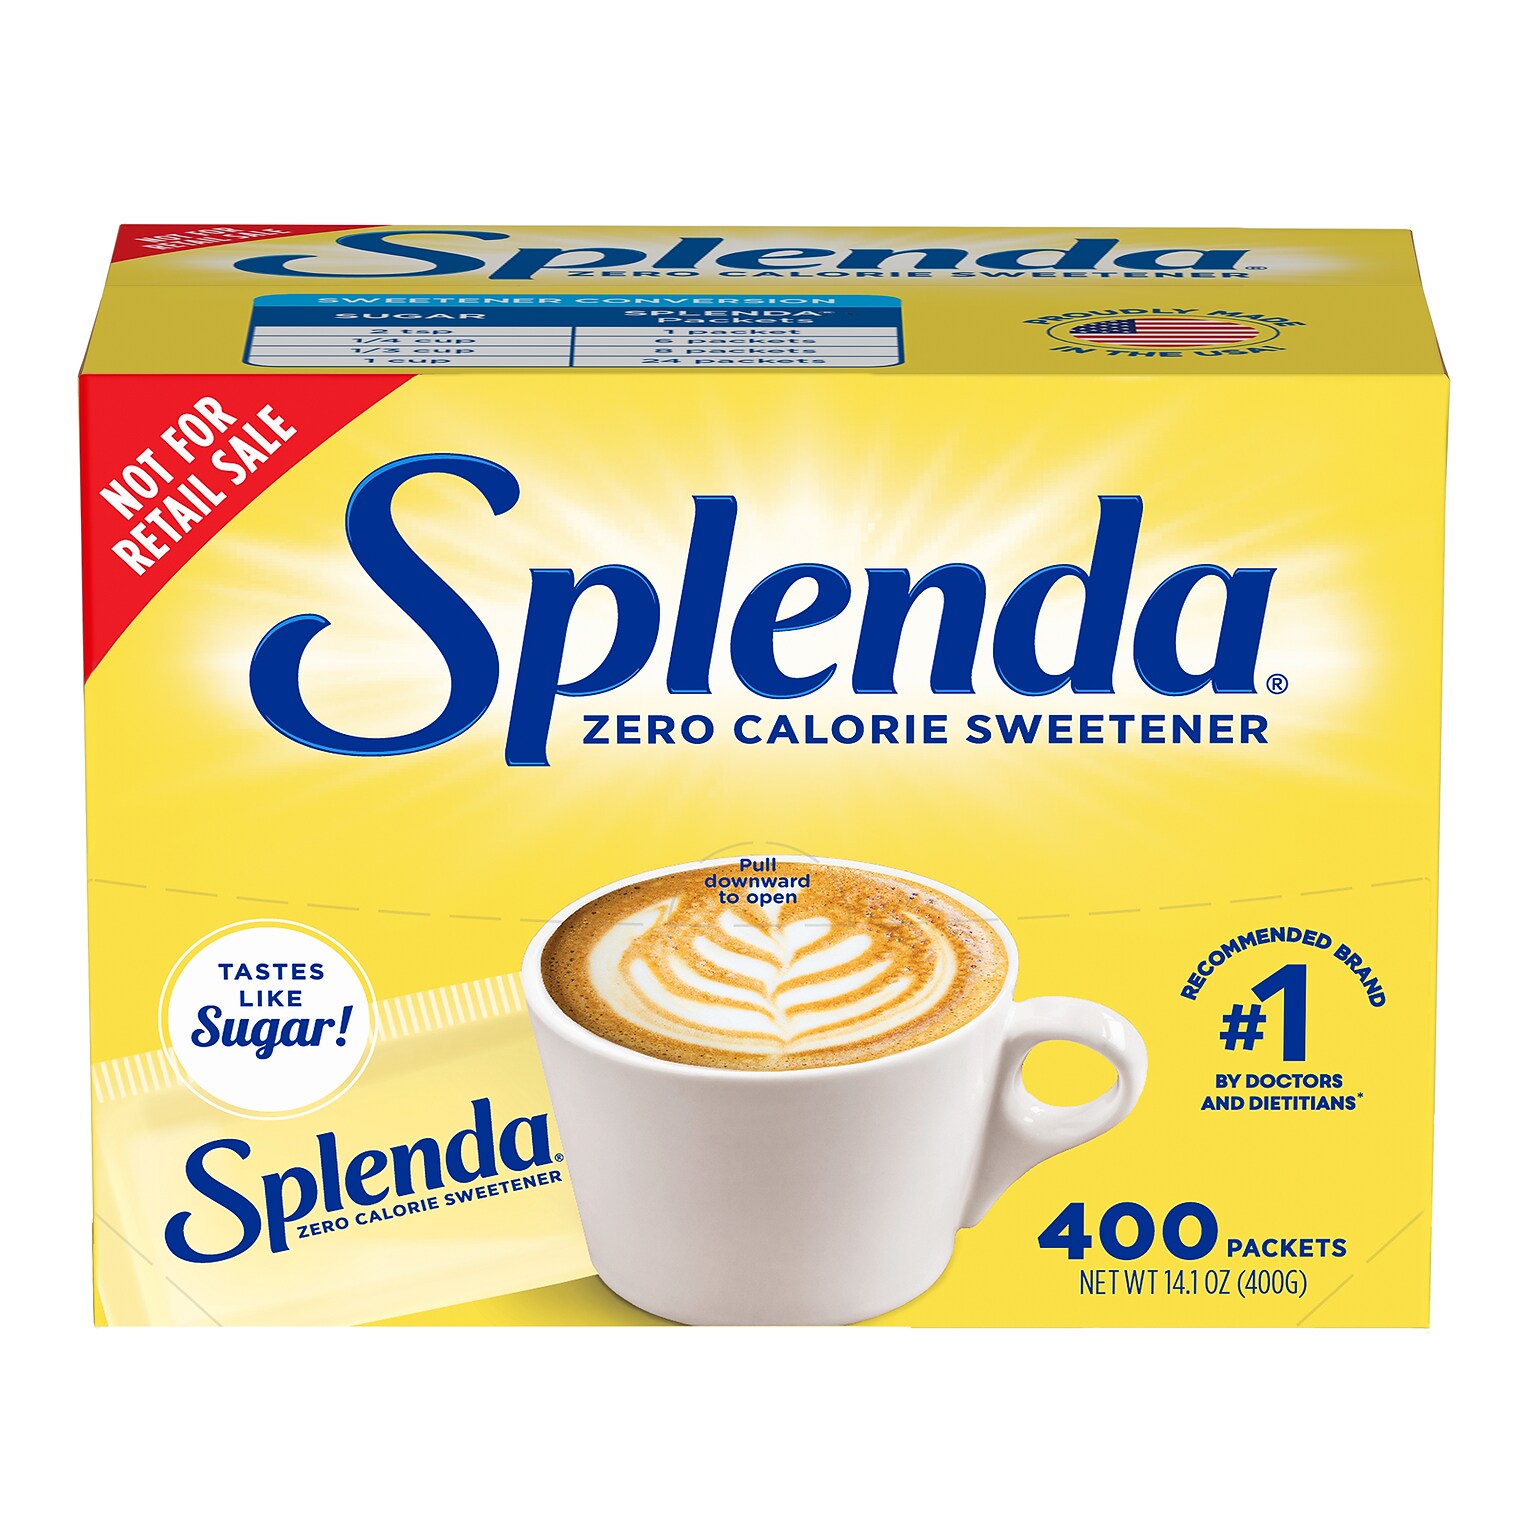 Splenda Zero Calorie Sweetener, 400 Packets/Box (HFP20041)